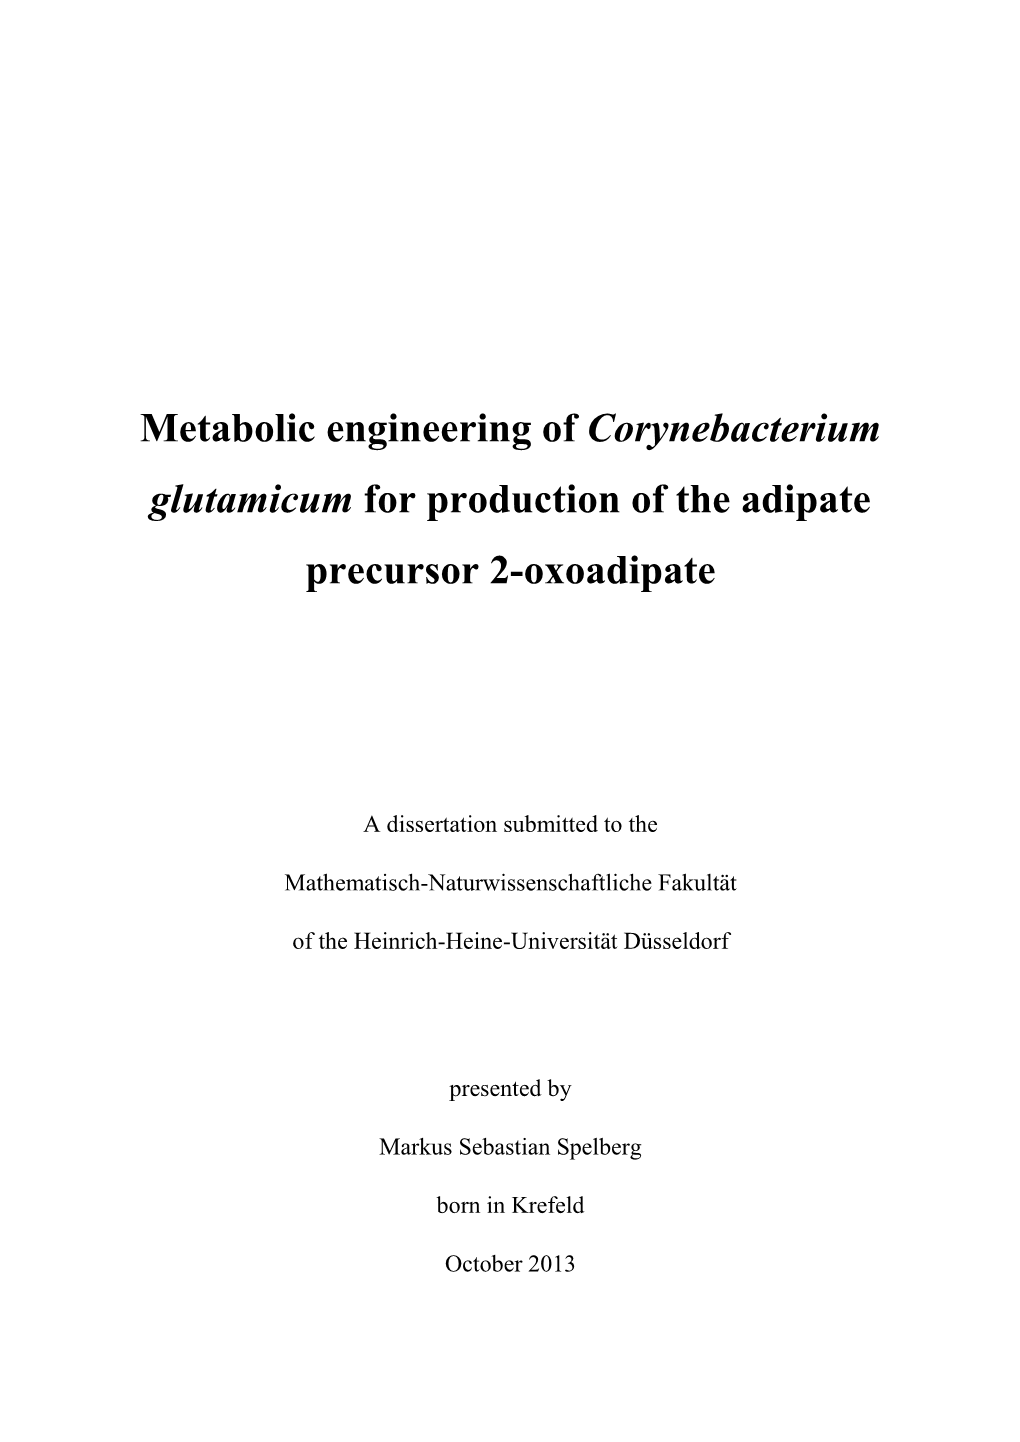 Metabolic Engineering of Corynebacterium Glutamicum for Production of the Adipate